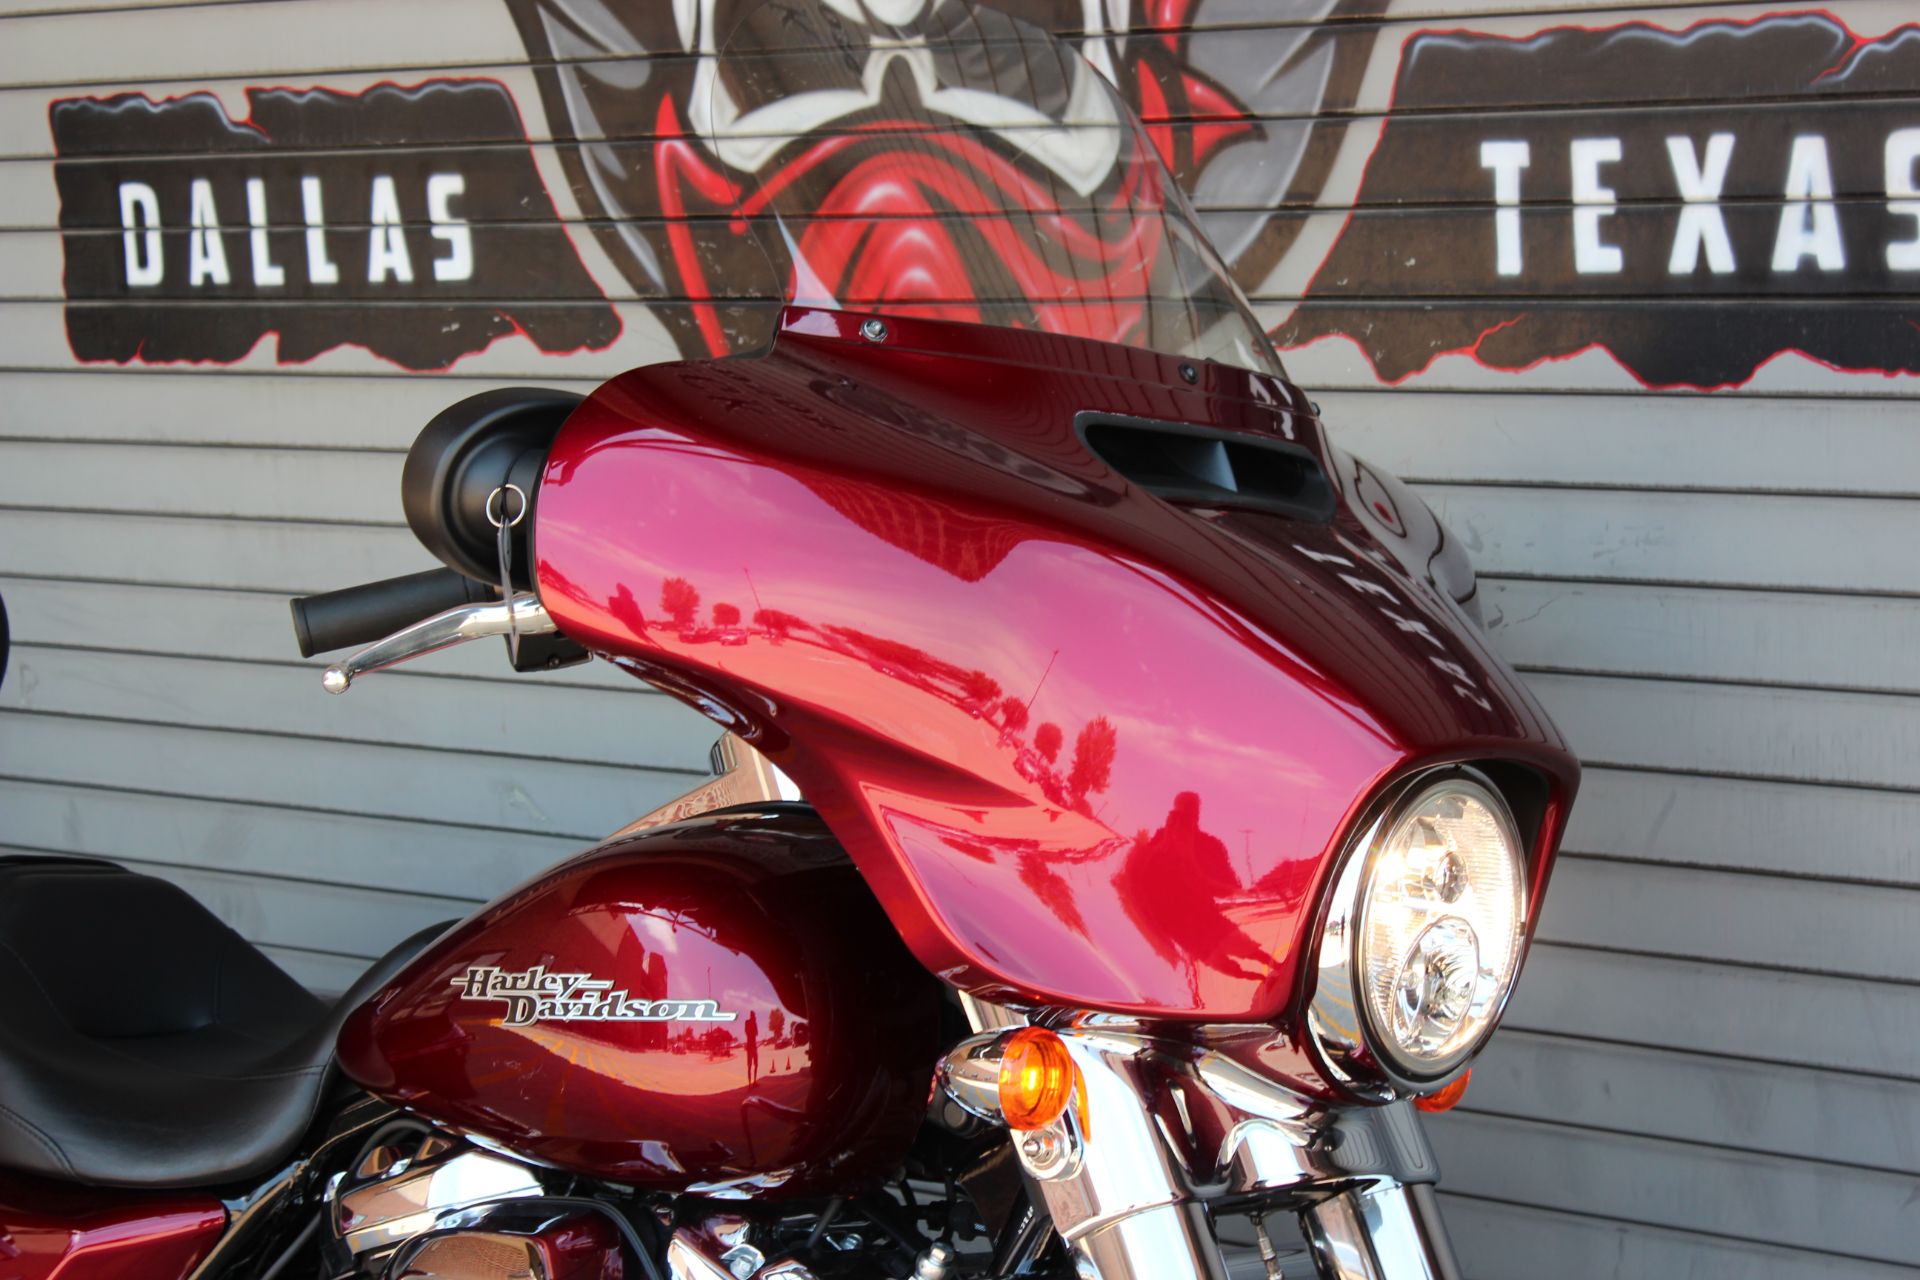 2017 Harley-Davidson Street Glide® in Carrollton, Texas - Photo 2